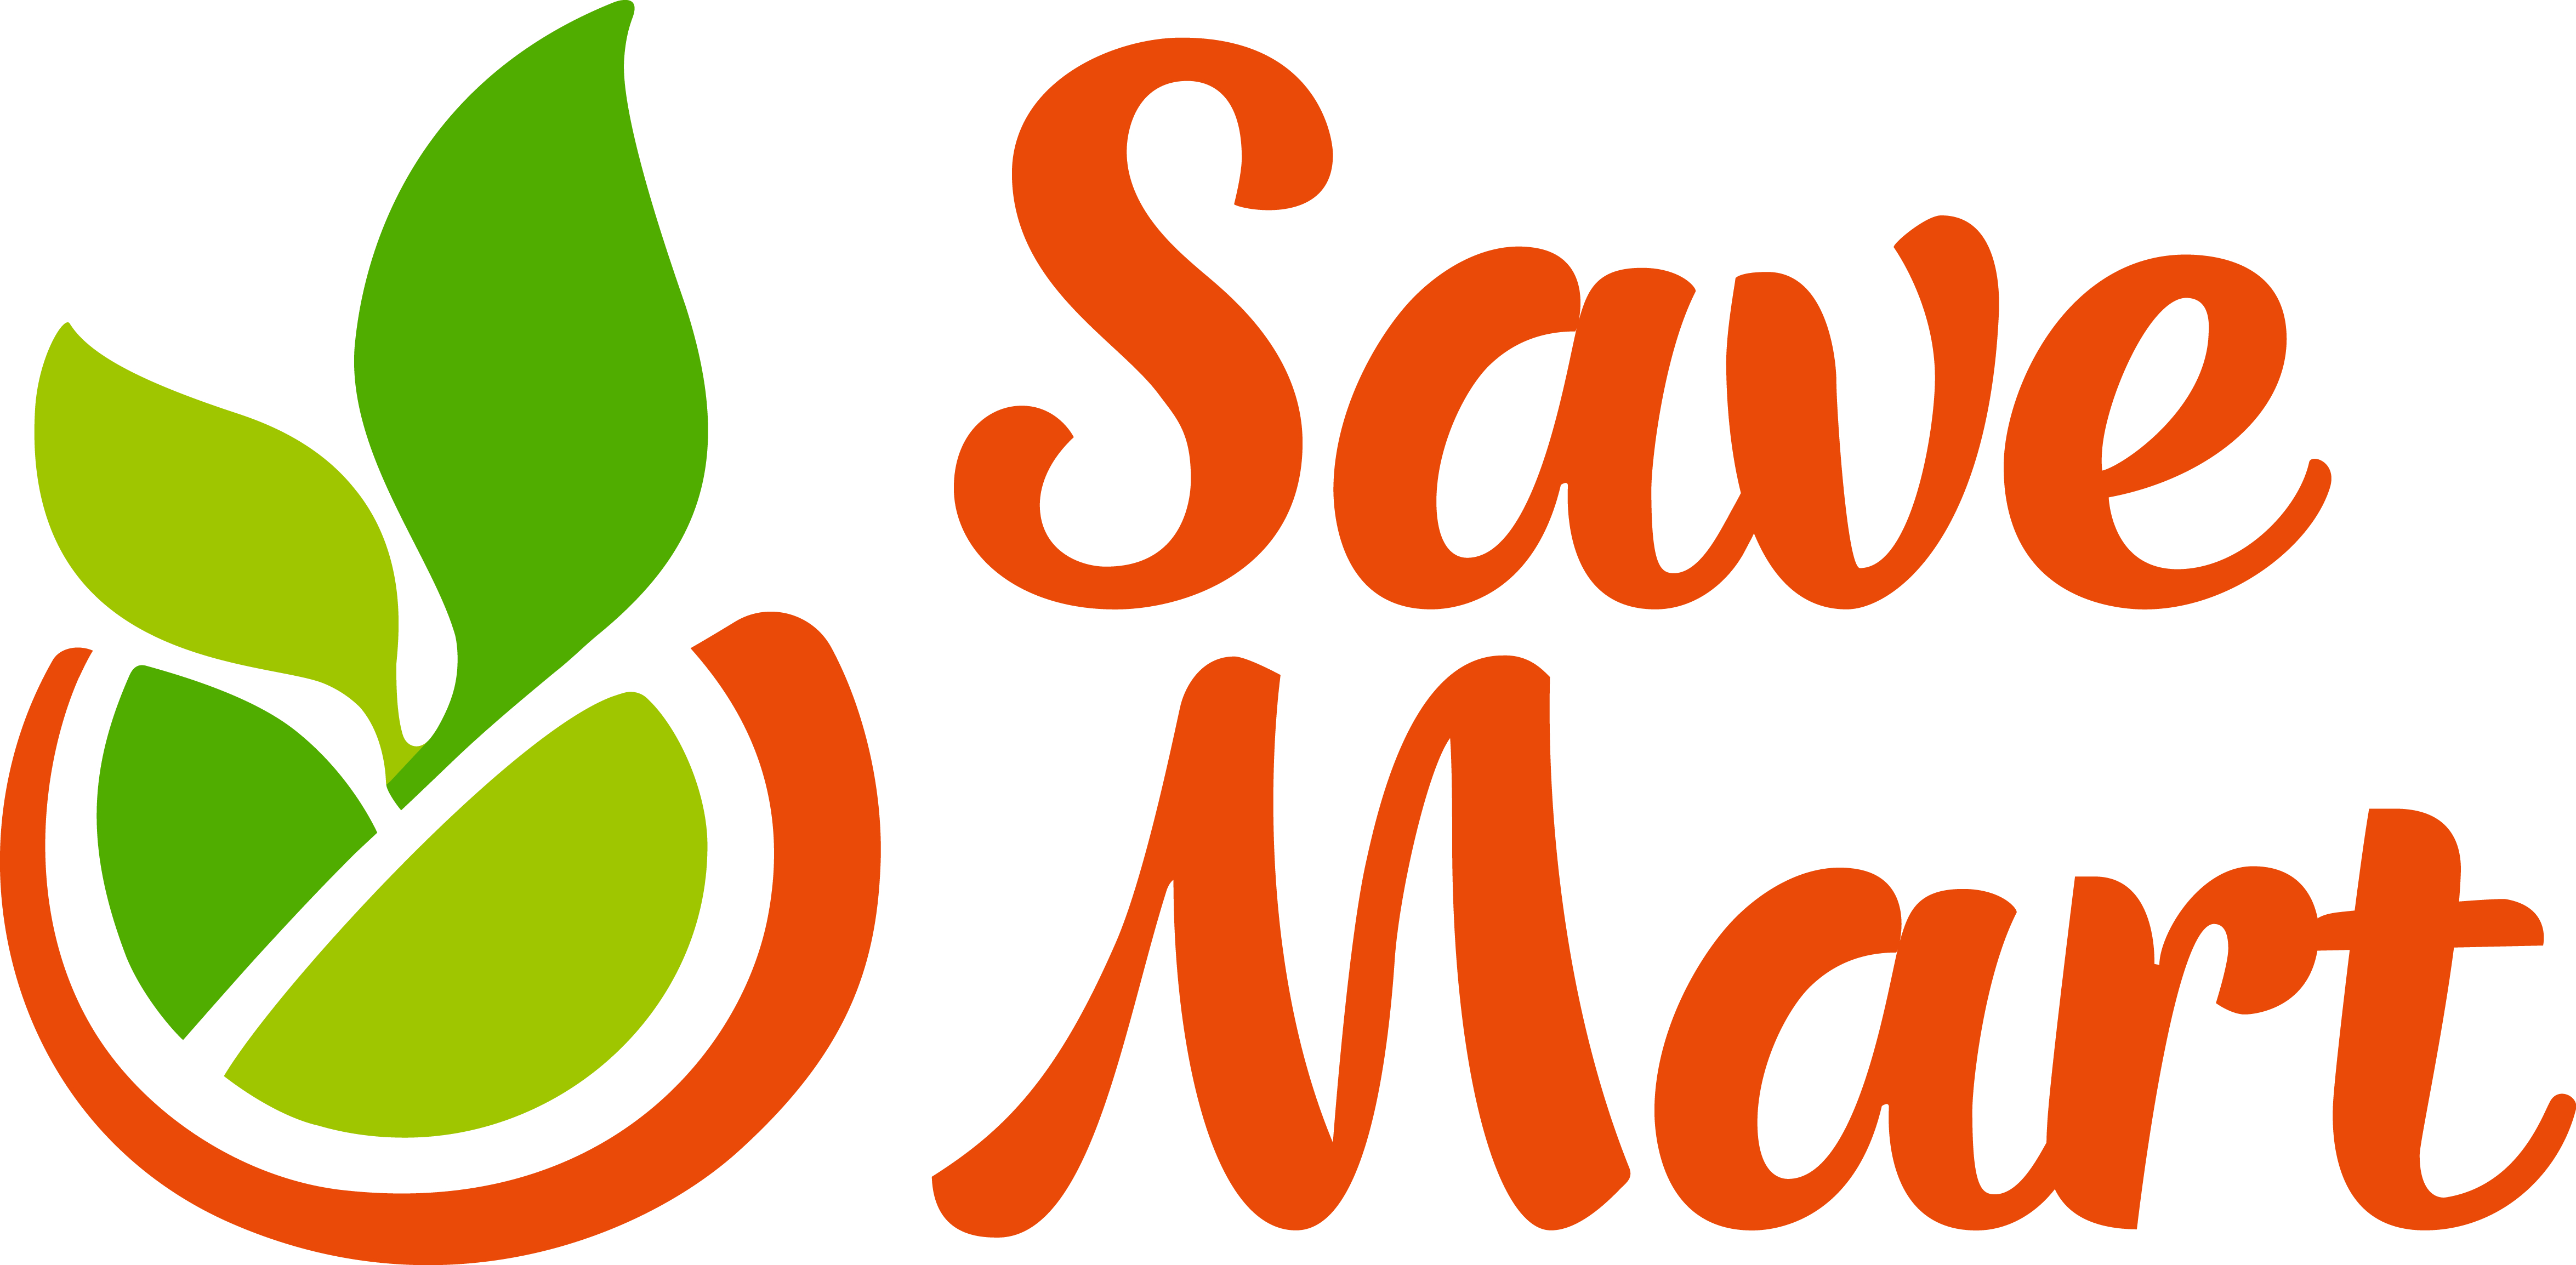 Save Mart Logo